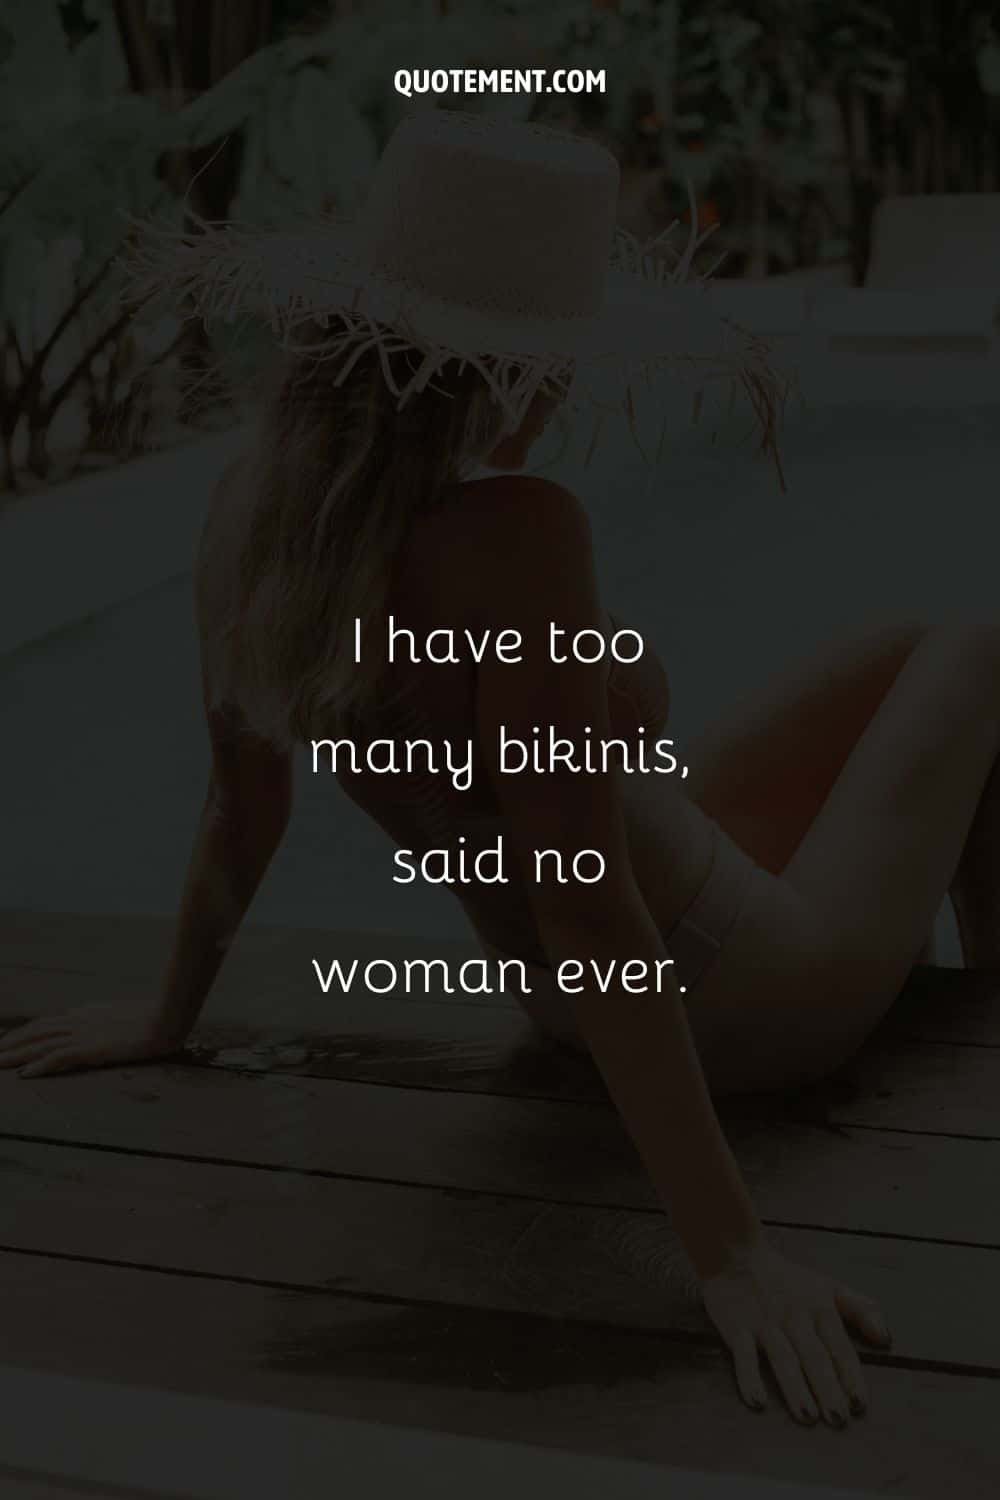 Woman in a bikini wearing a hat representing bikini insta caption.
